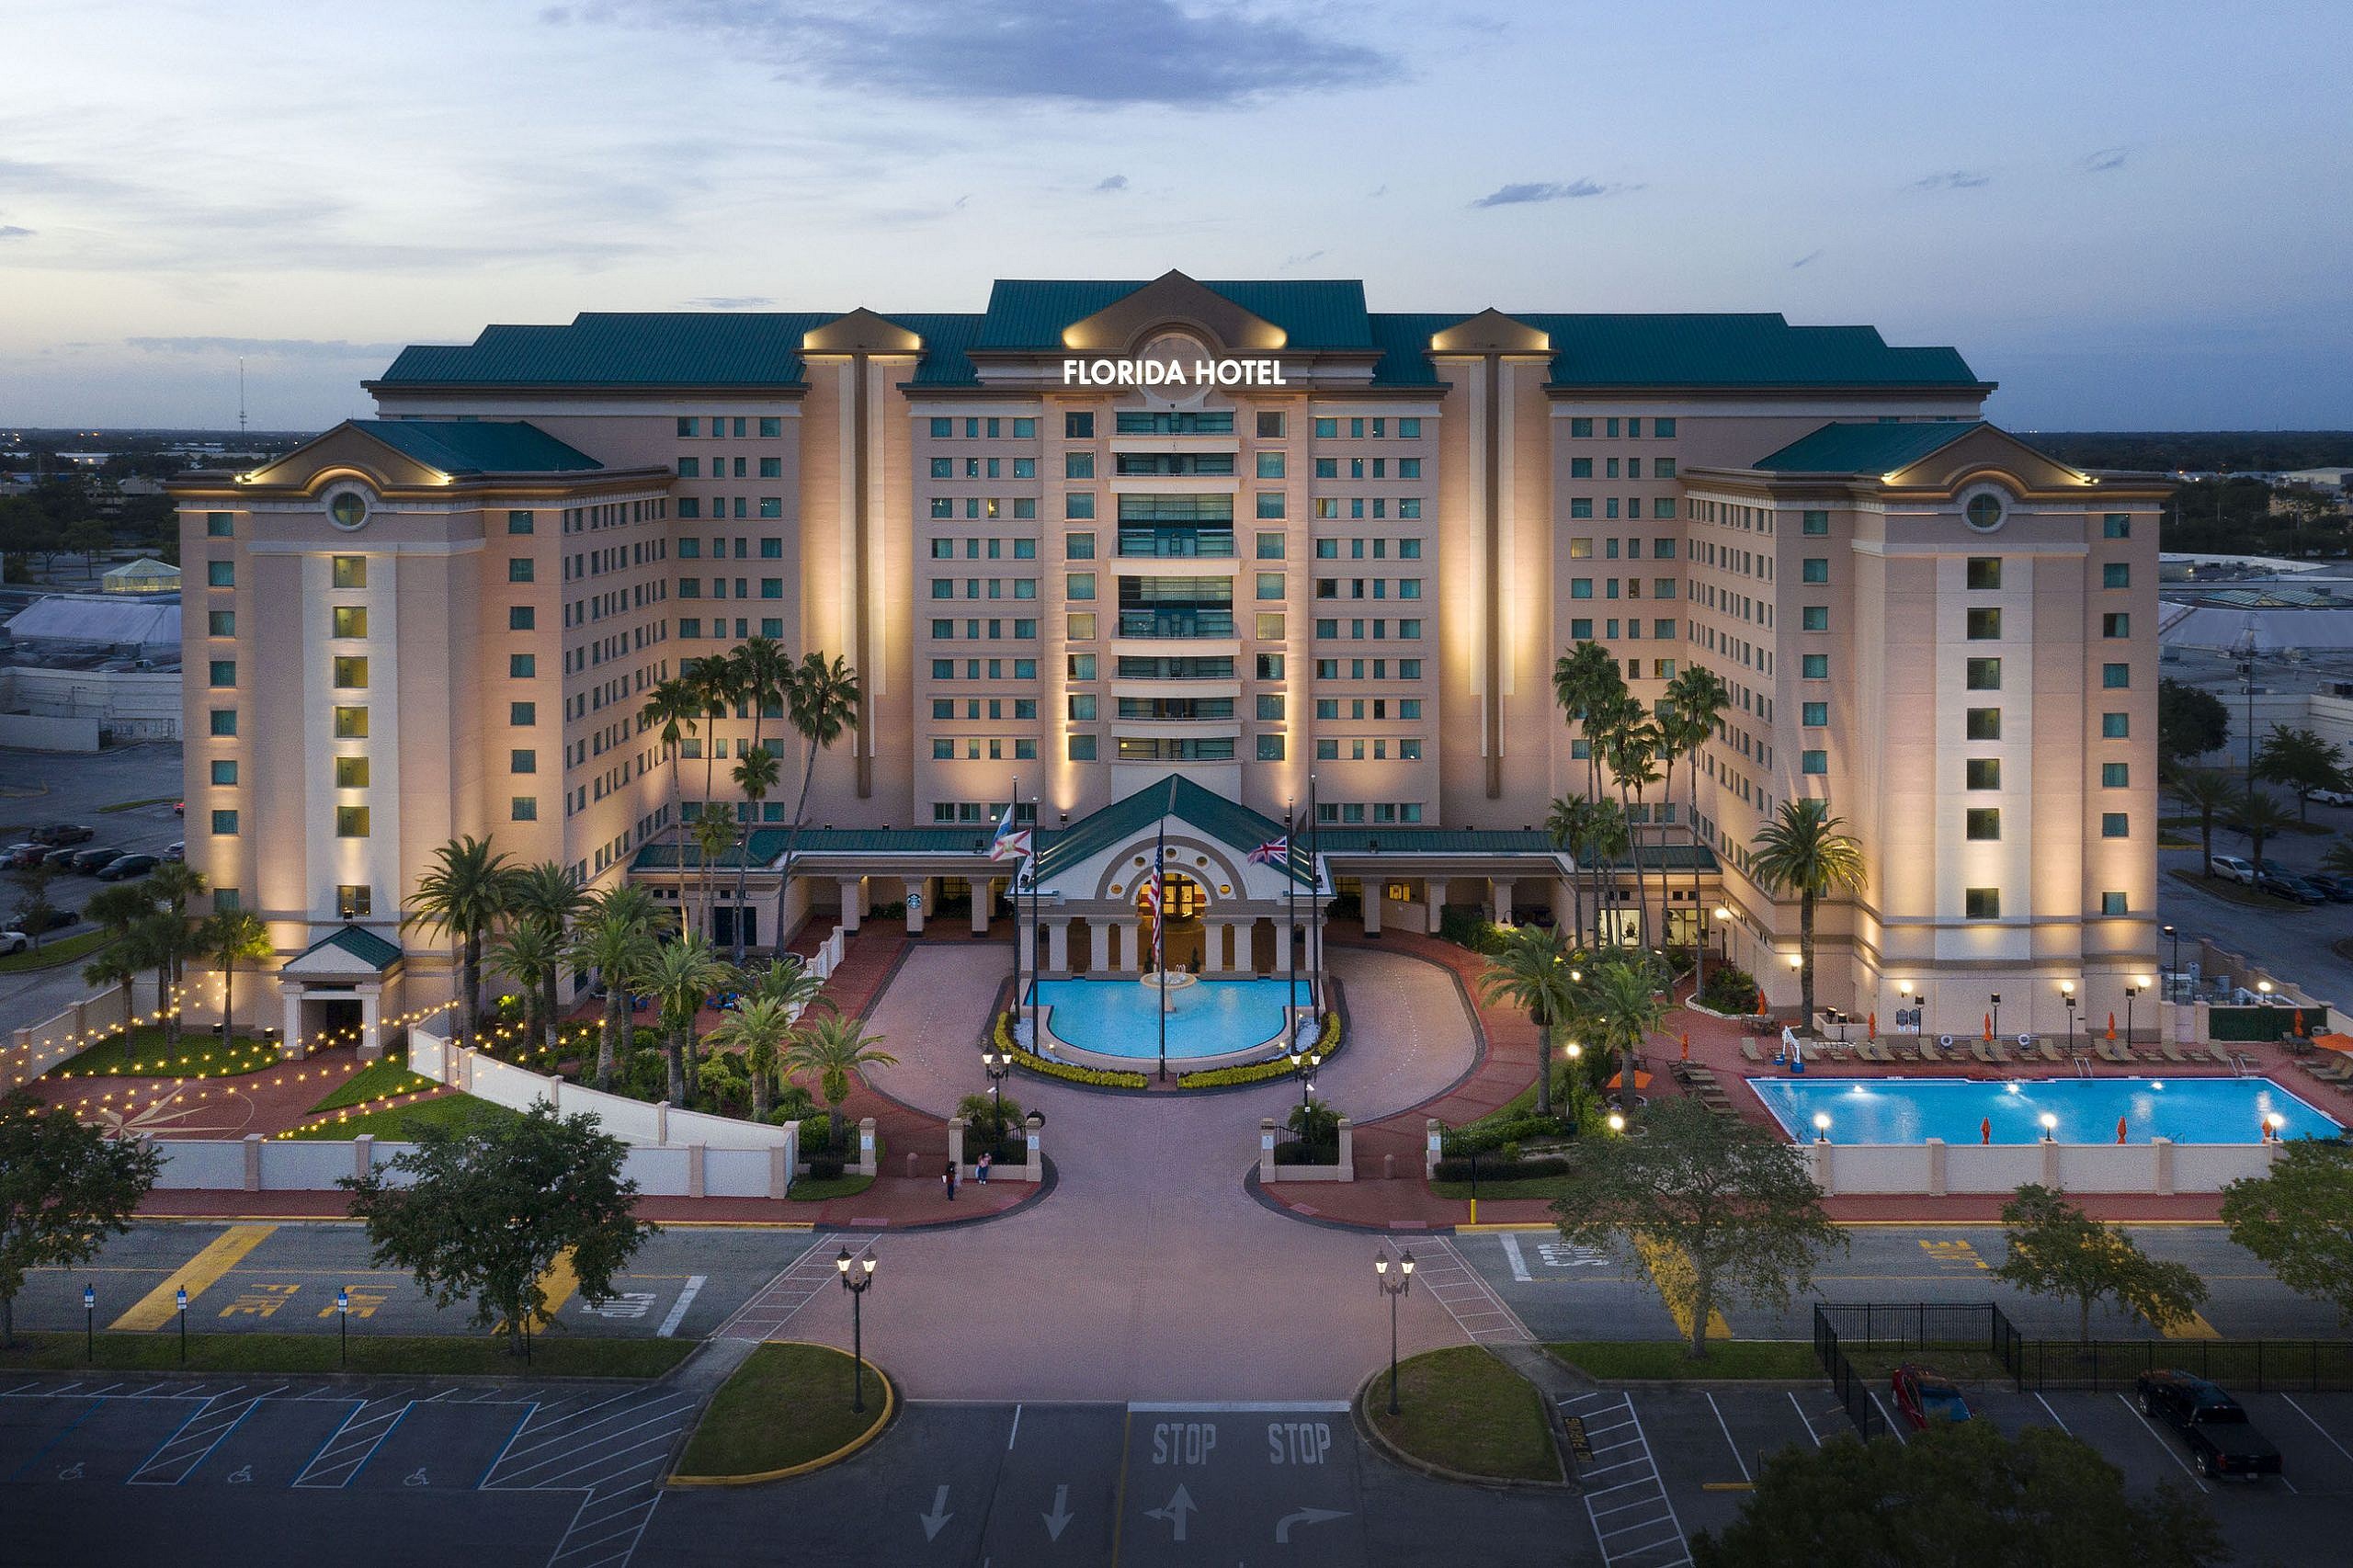 The Florida Hotel, Orlando